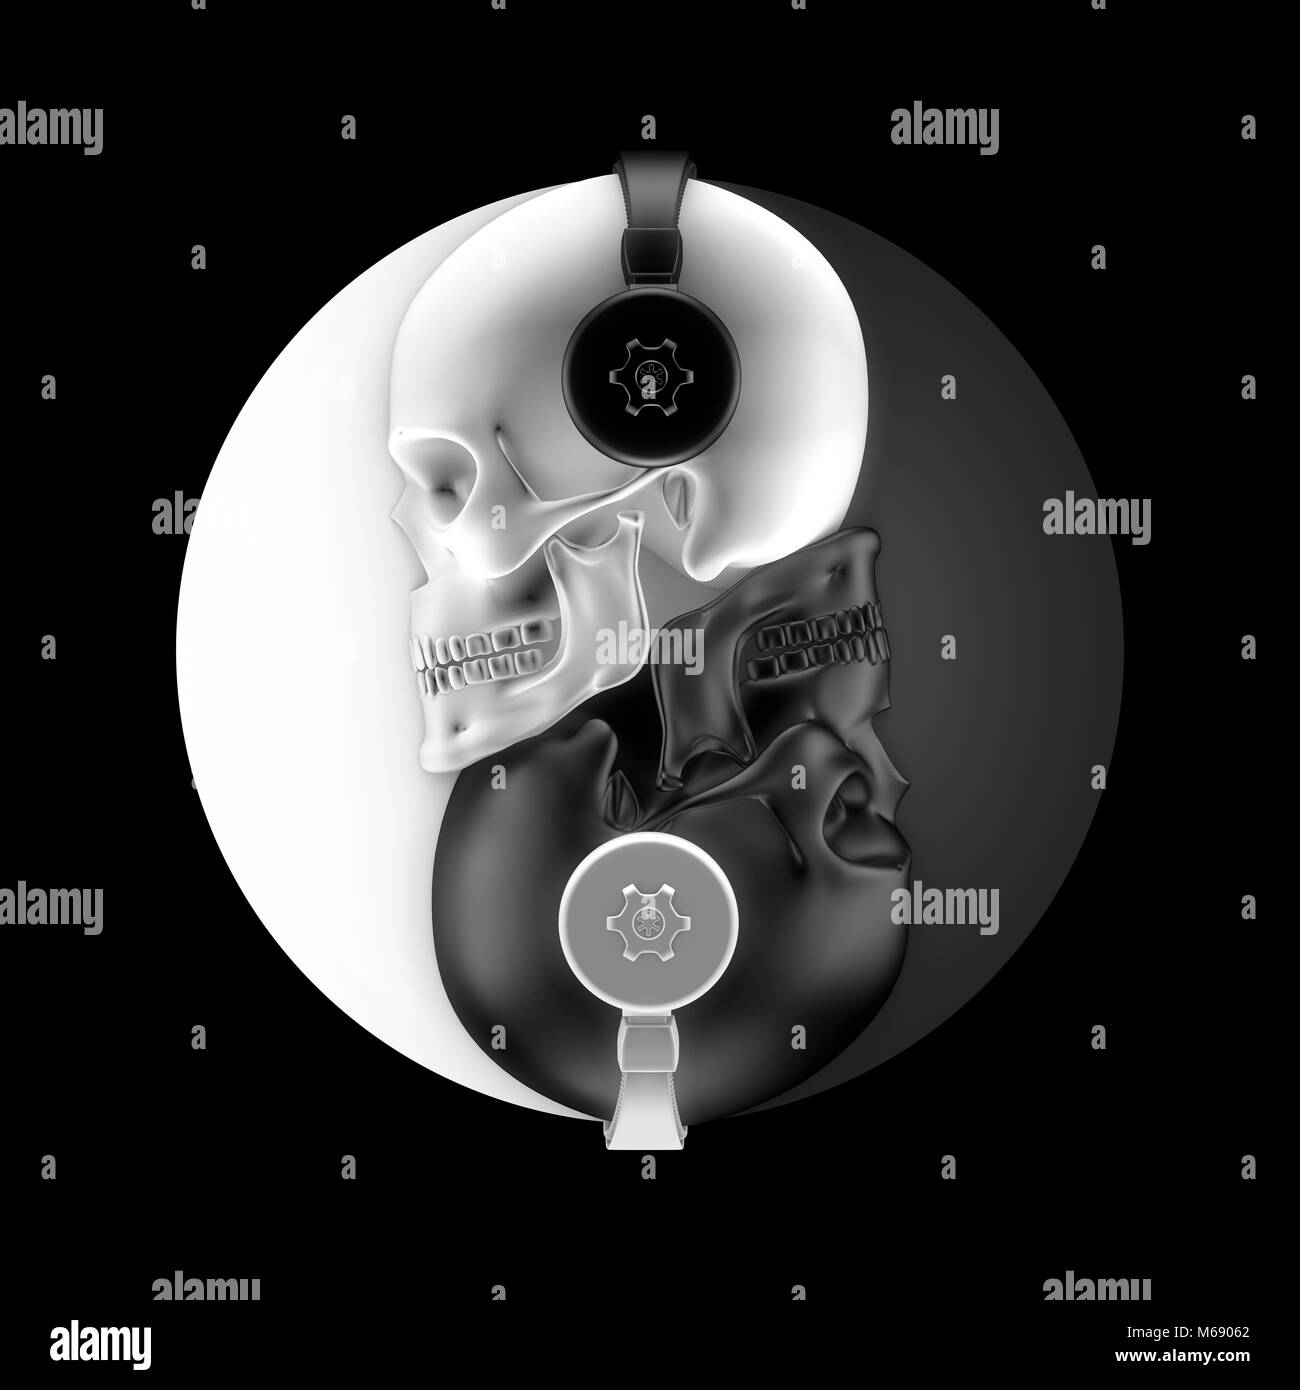 Headphone skulls harmony / 3D illustration of black and white skulls with headphones forming yin yang symbol Stock Photo